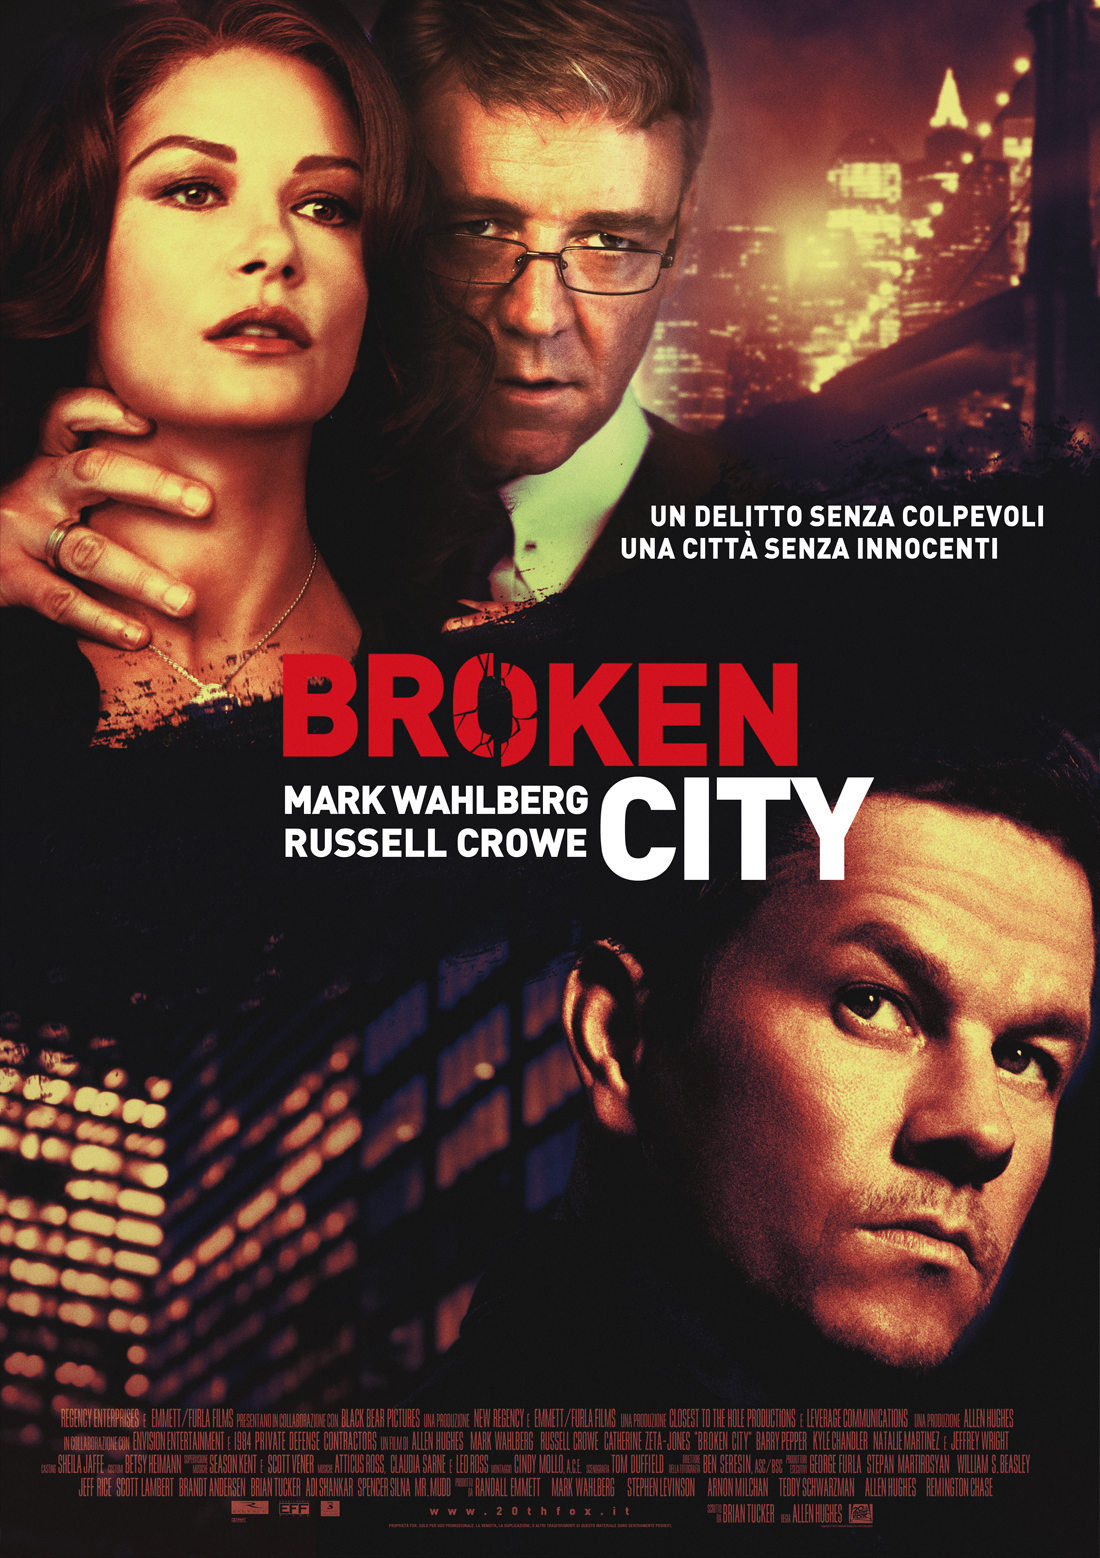 Broken City - Movie Poster #3 (Original)